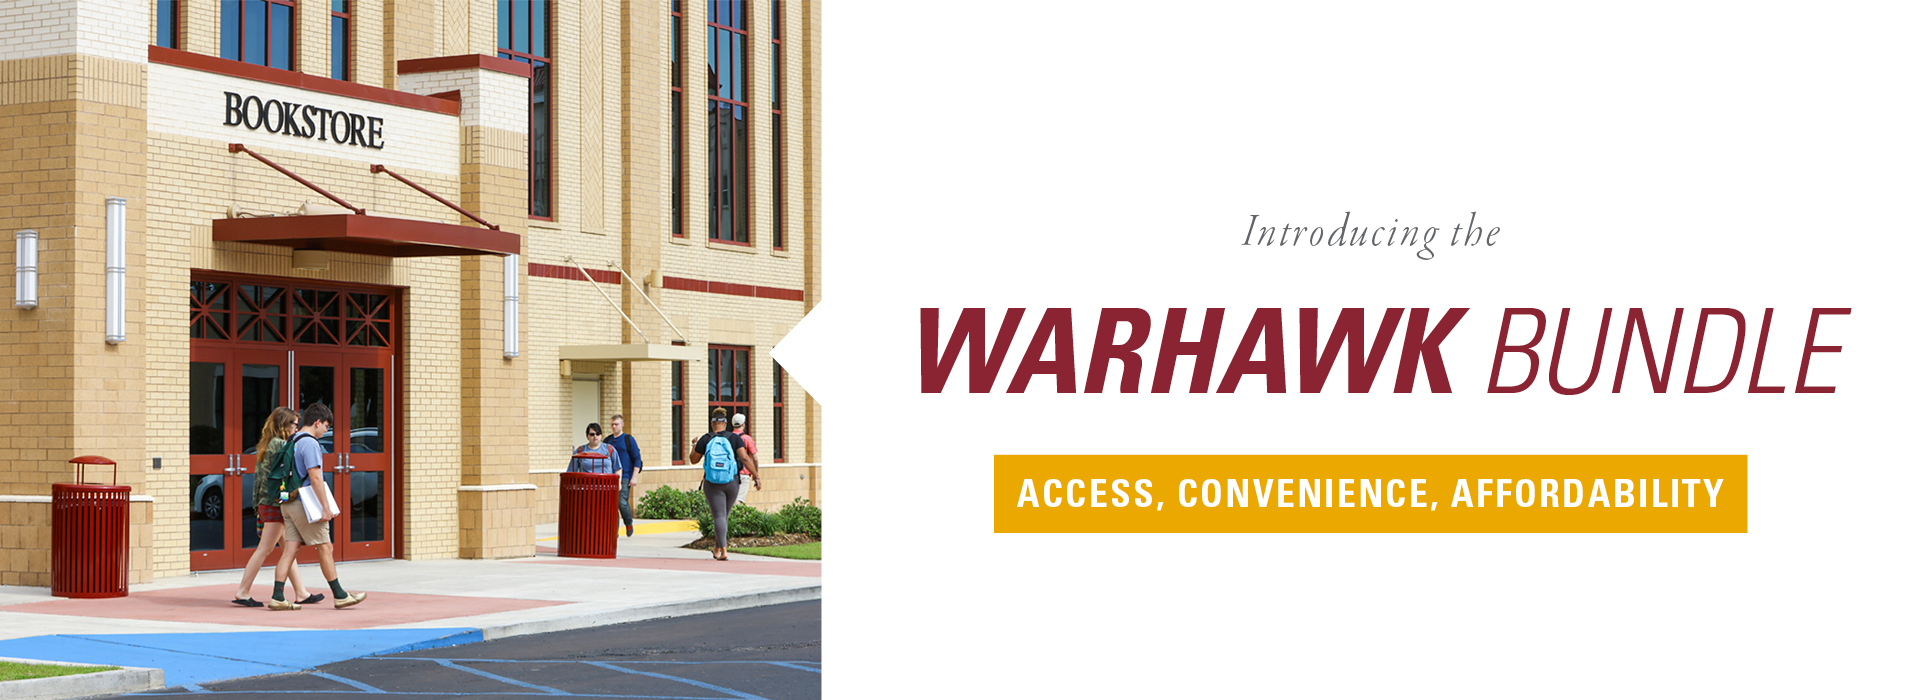 Introducing the Warhawk Bundle banner ad